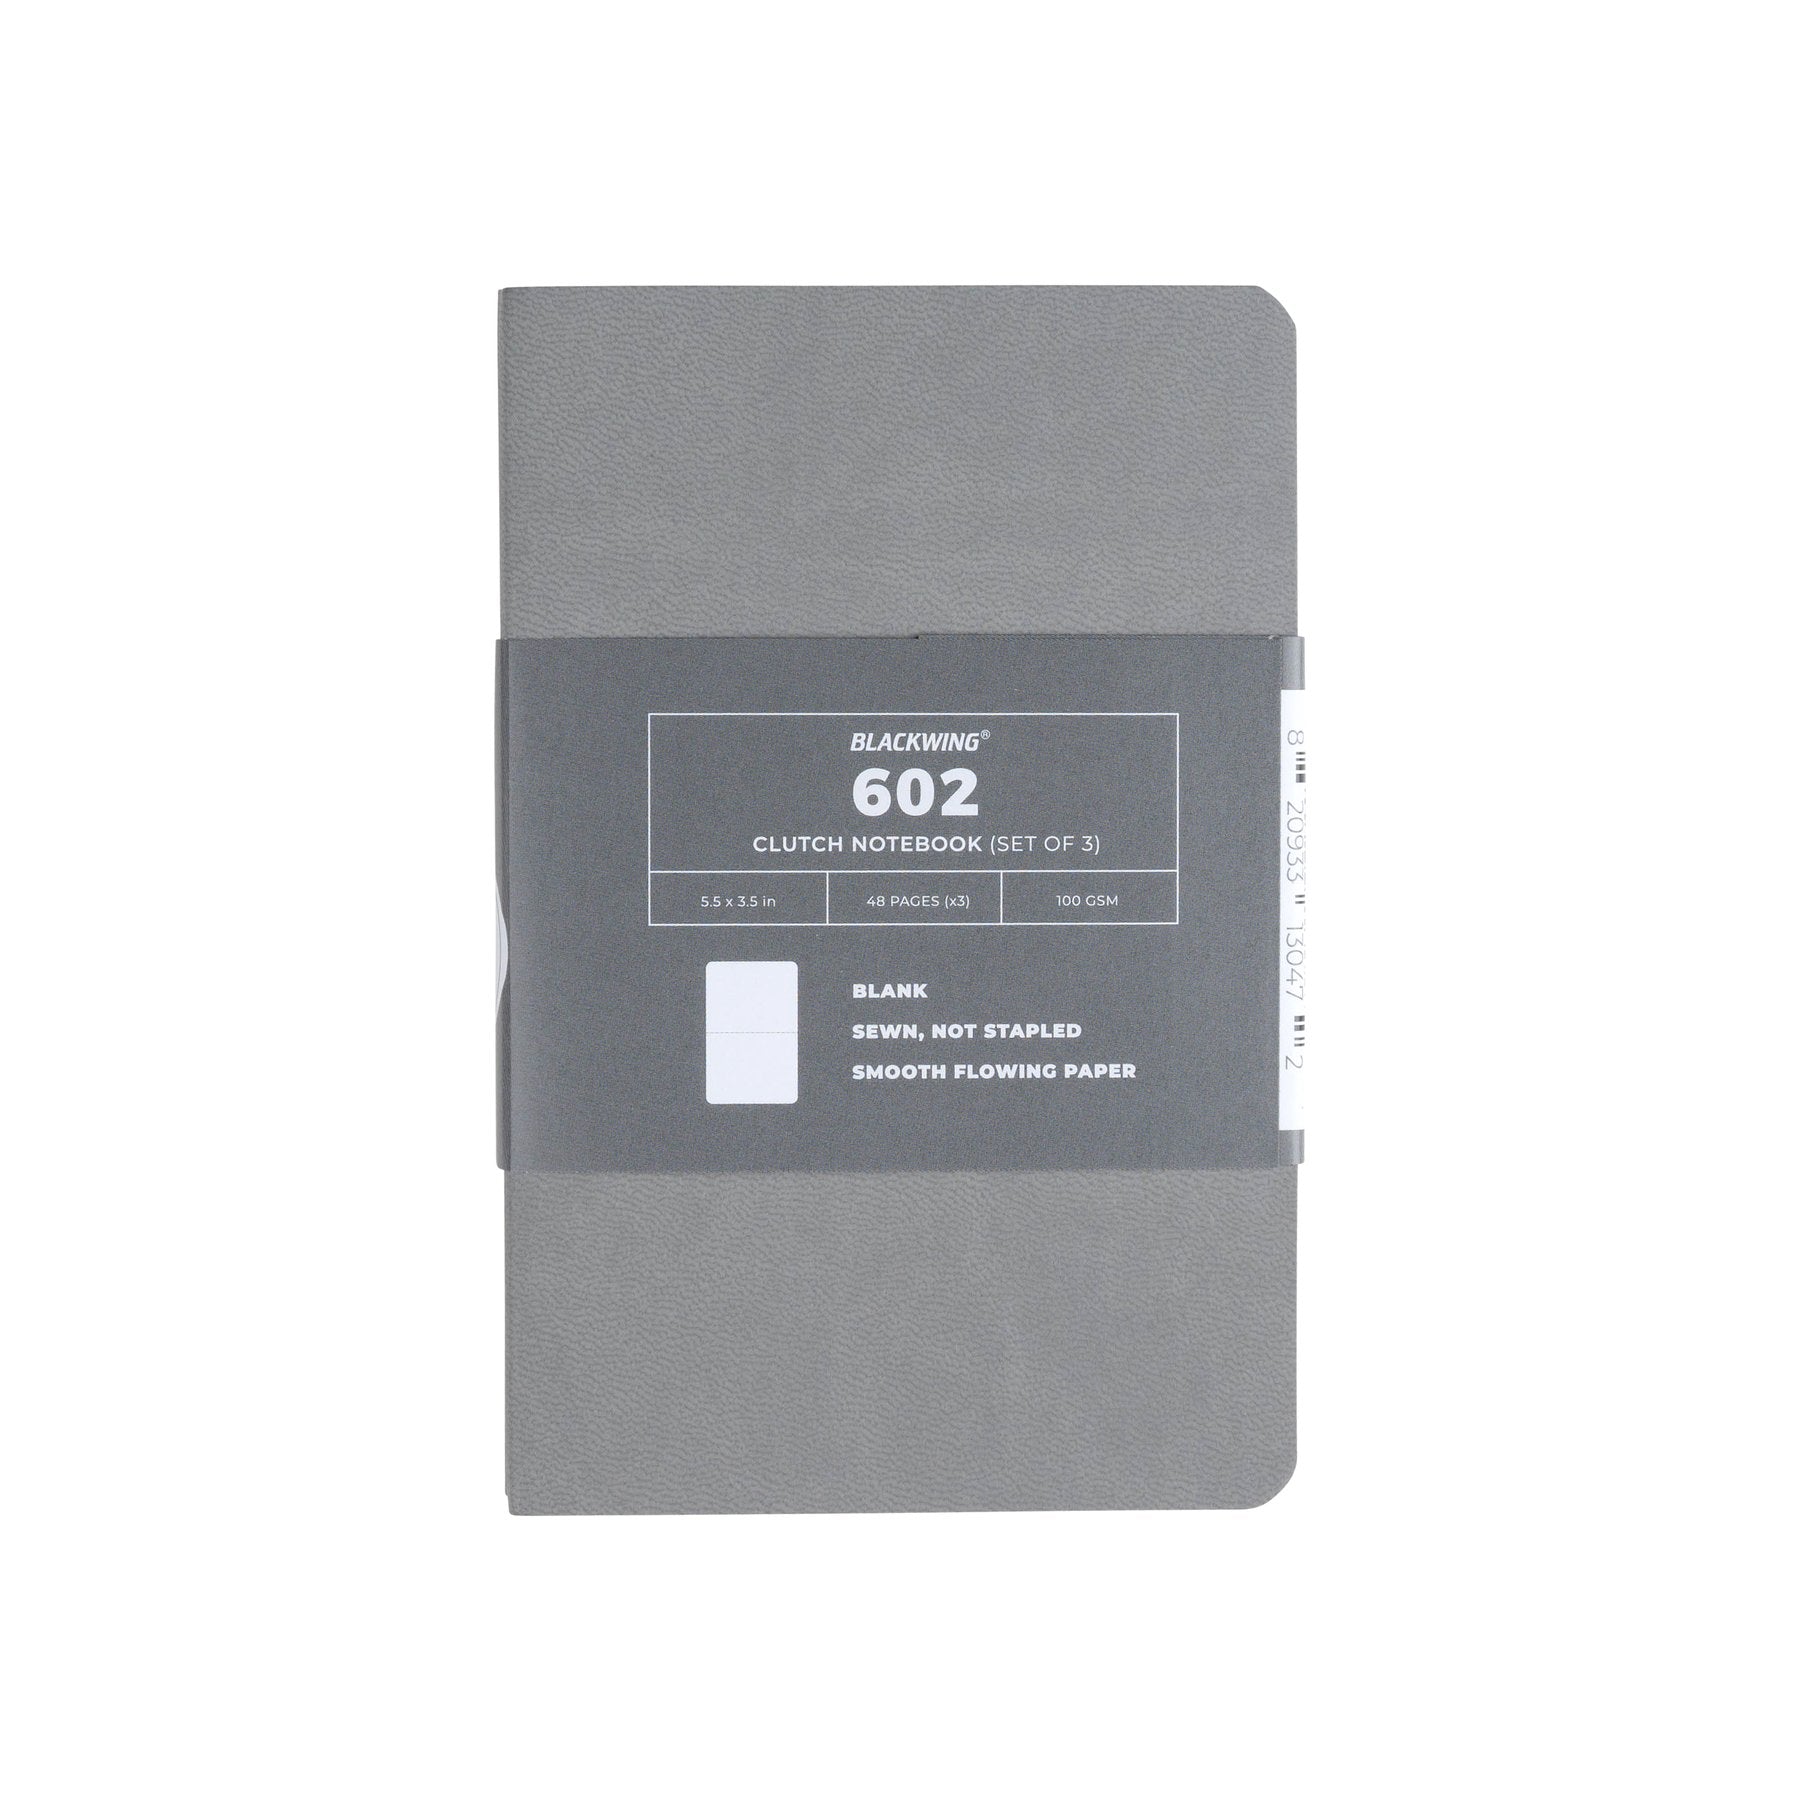 Blackwing 602 Grey Clutch Notebooks - Set of 3 (Blank)